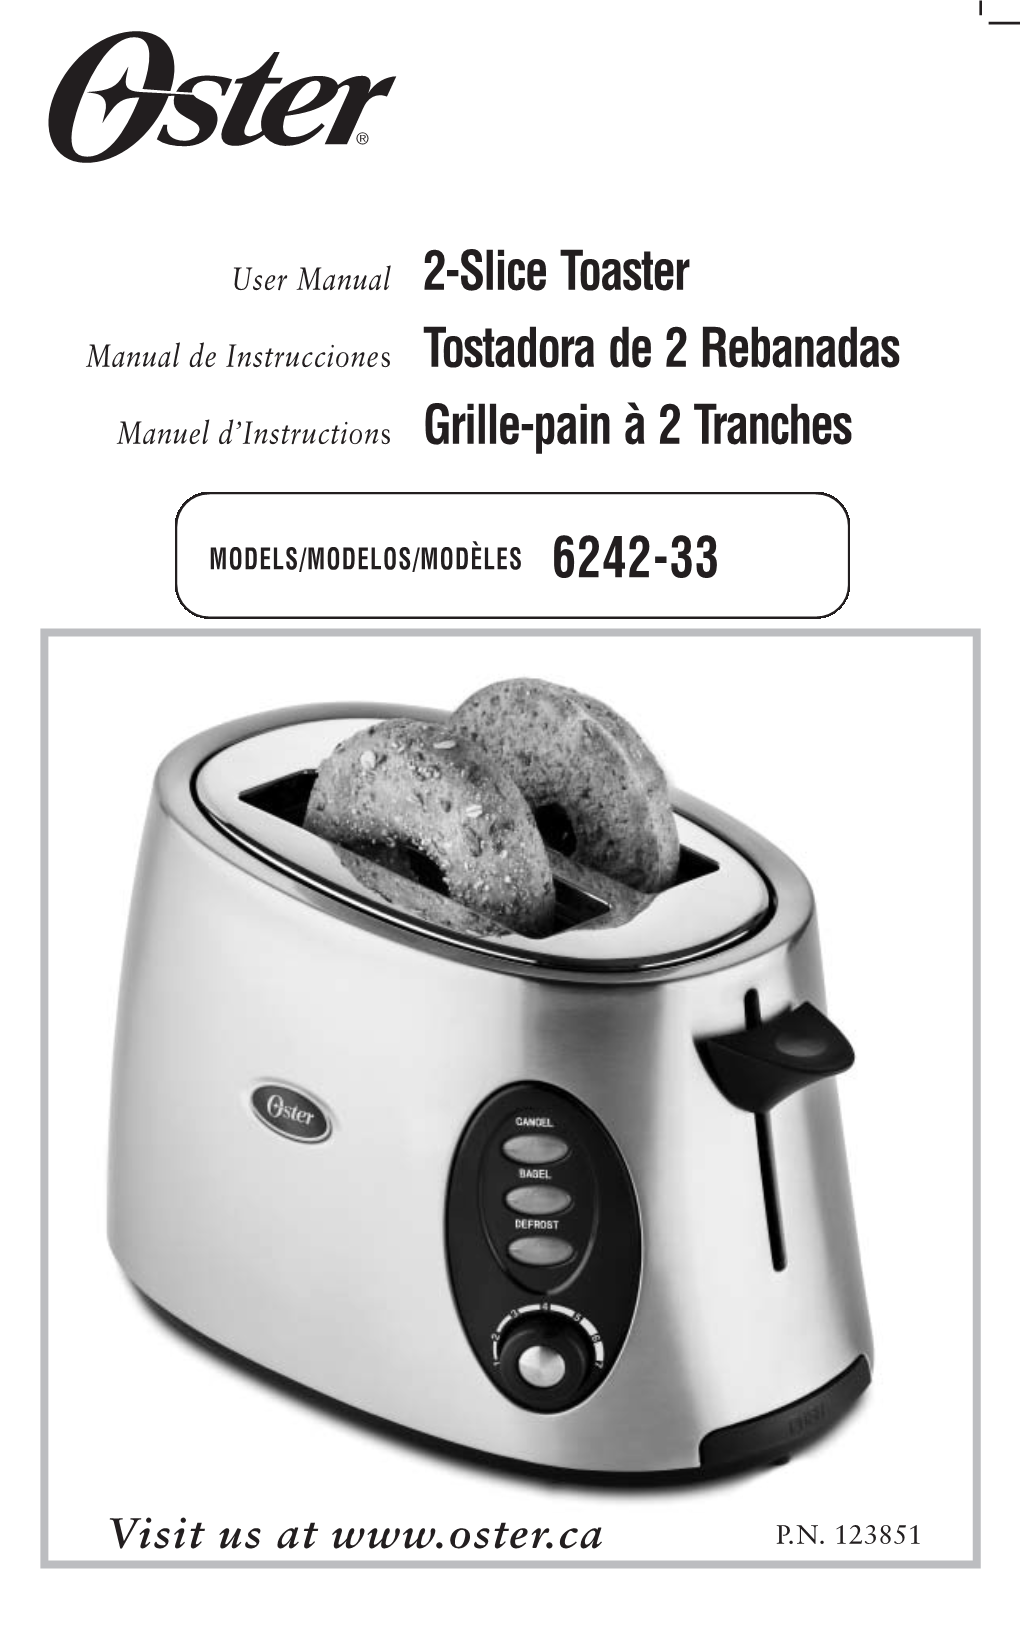 Oster® 2-Slice Toaster User Manual